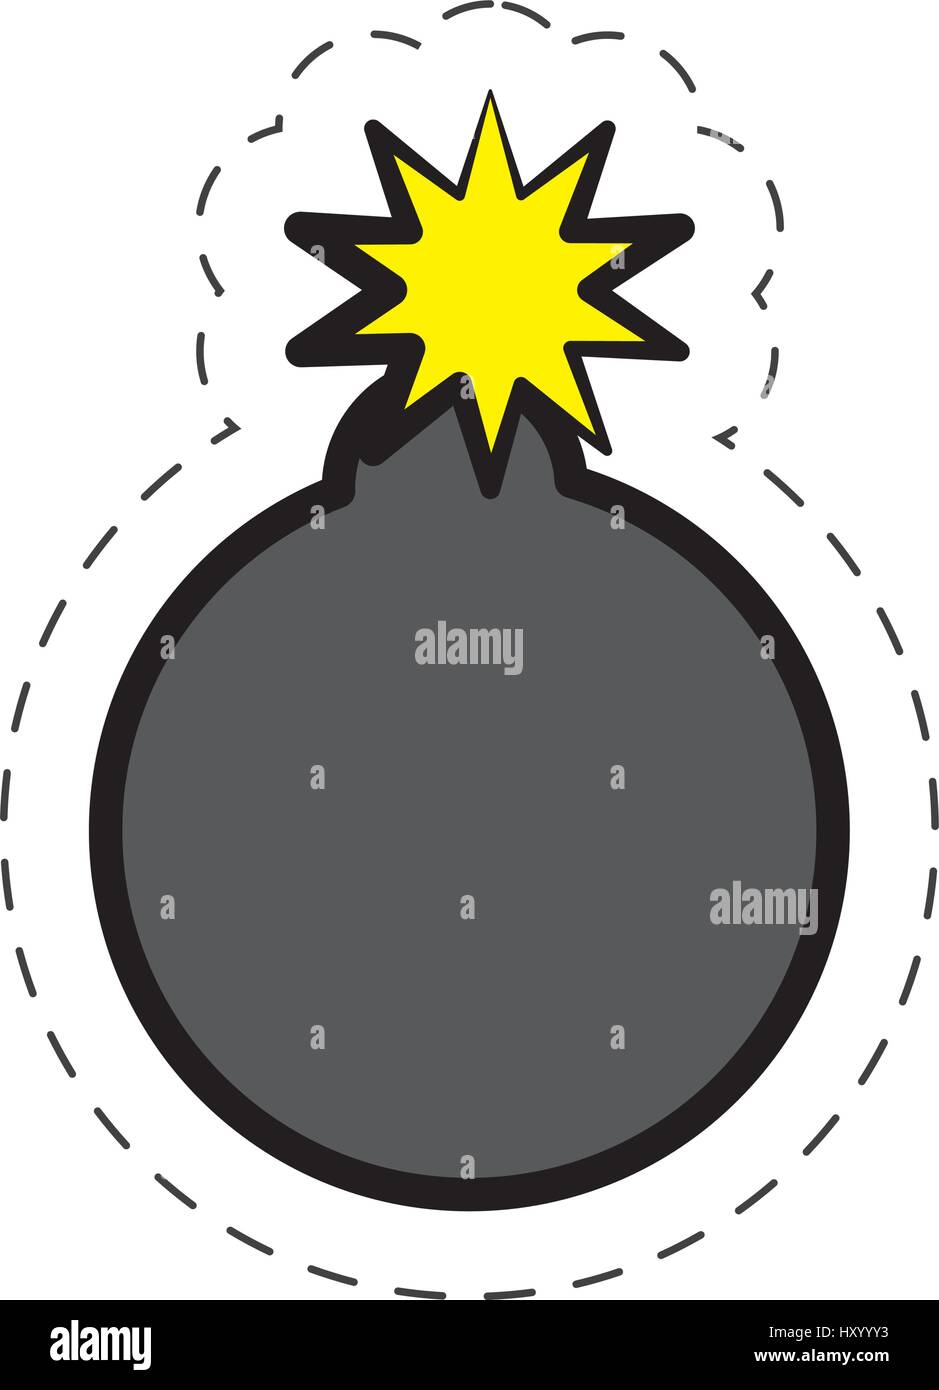 comic bomb explotion symbol Stock Vector